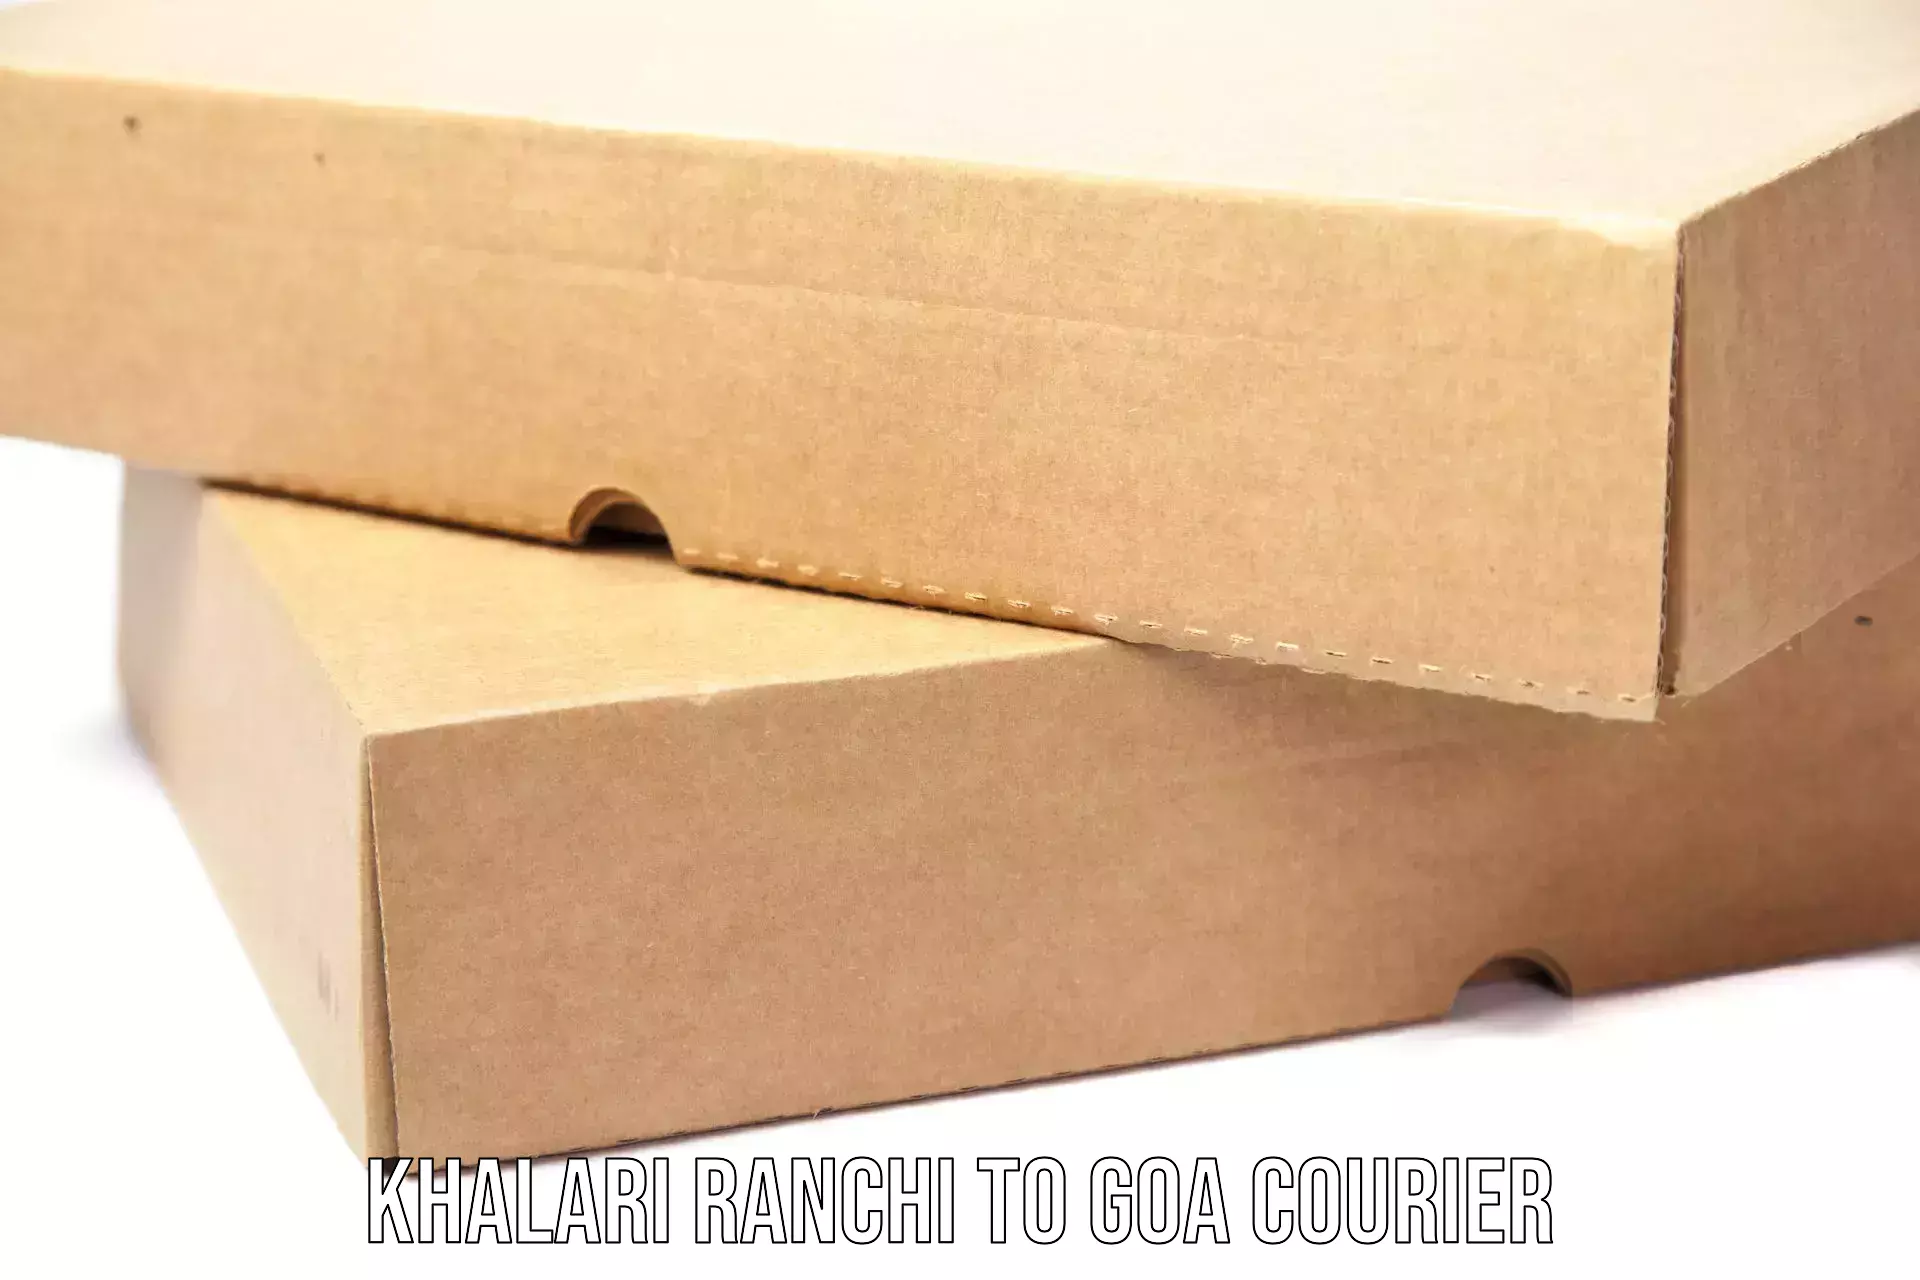 High-speed parcel service Khalari Ranchi to South Goa